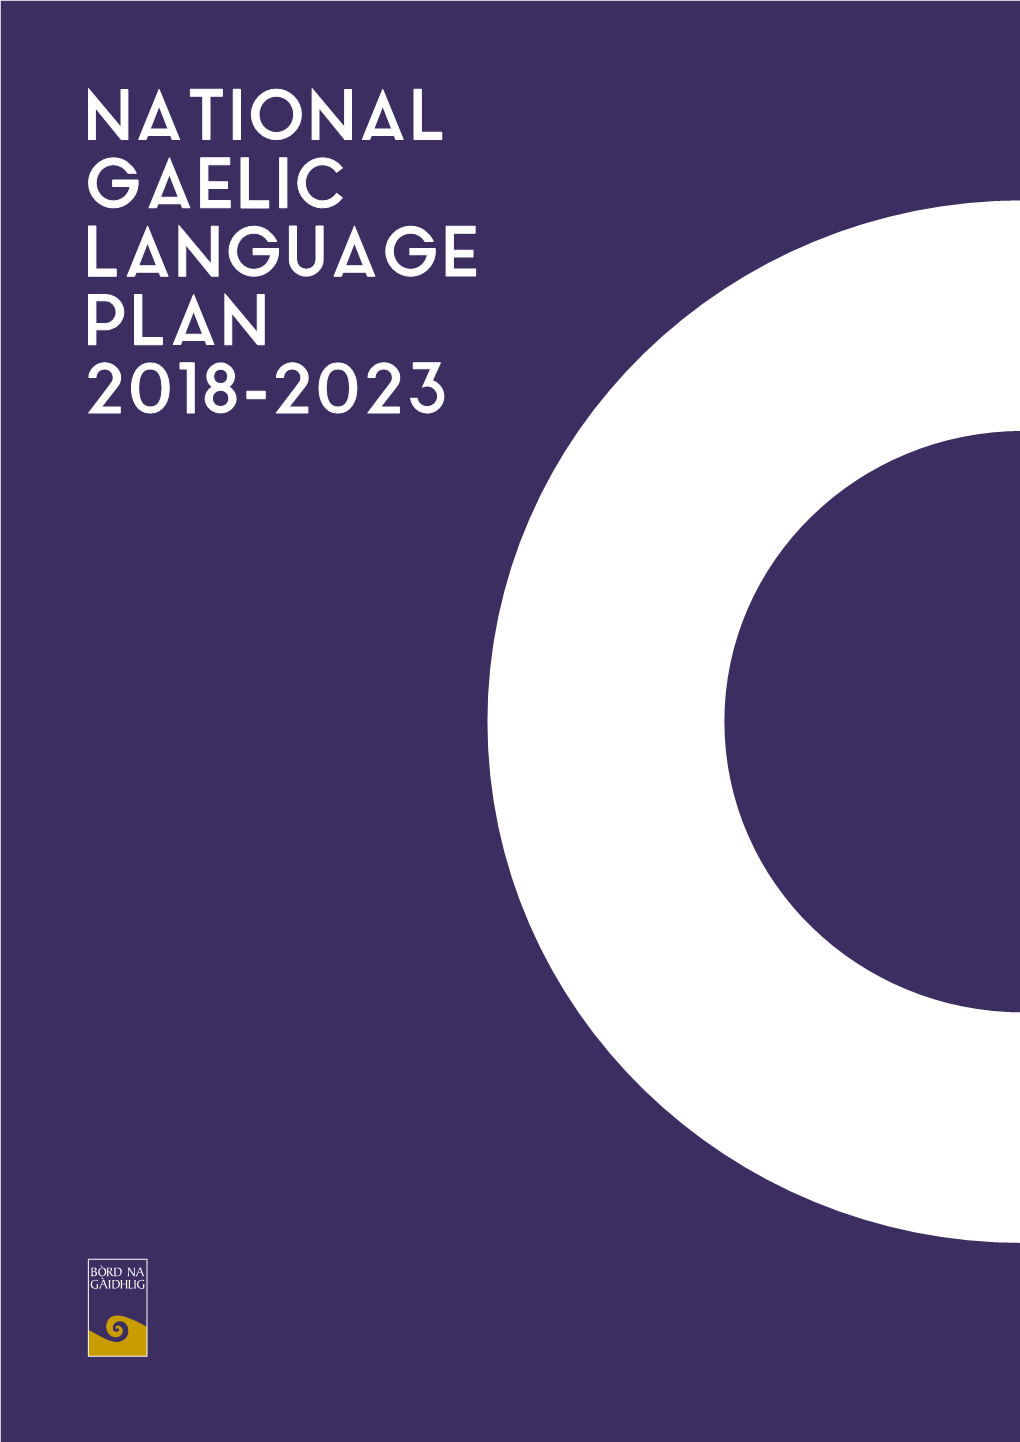 National Gaelic Language Plan - Overview 8 12 14